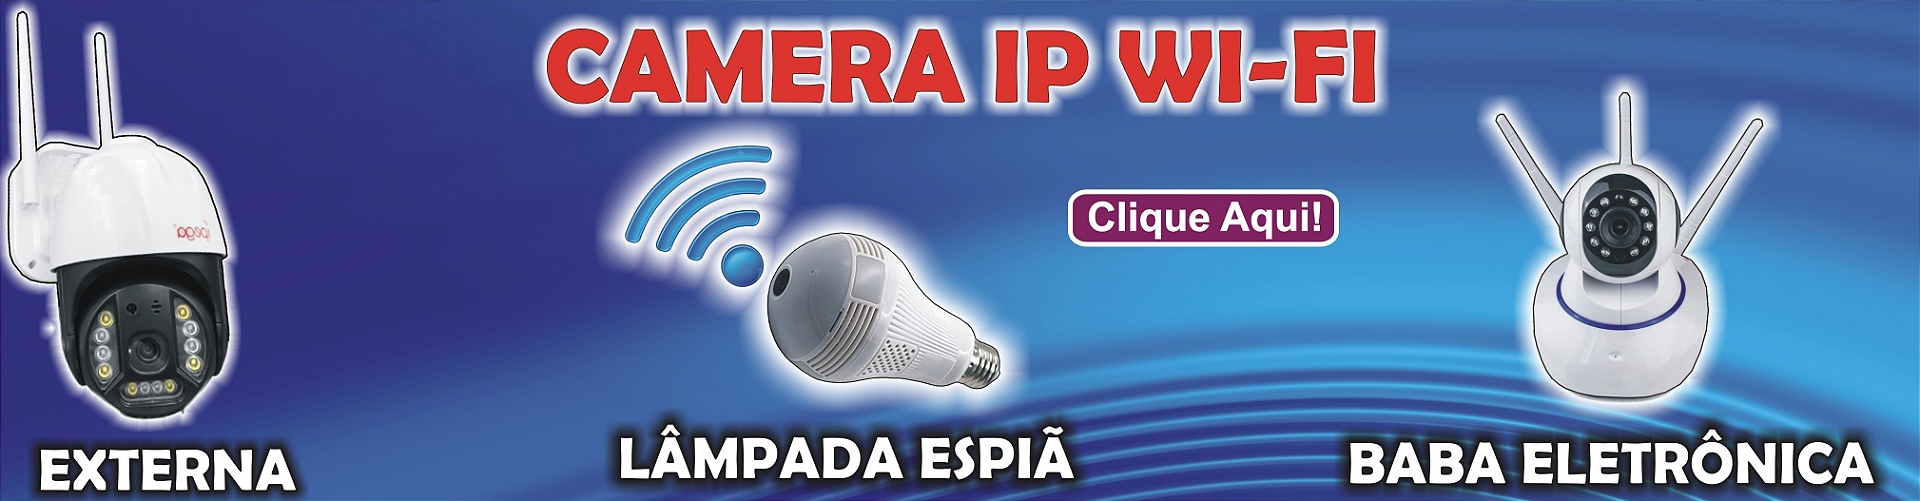 Camera IP wifi